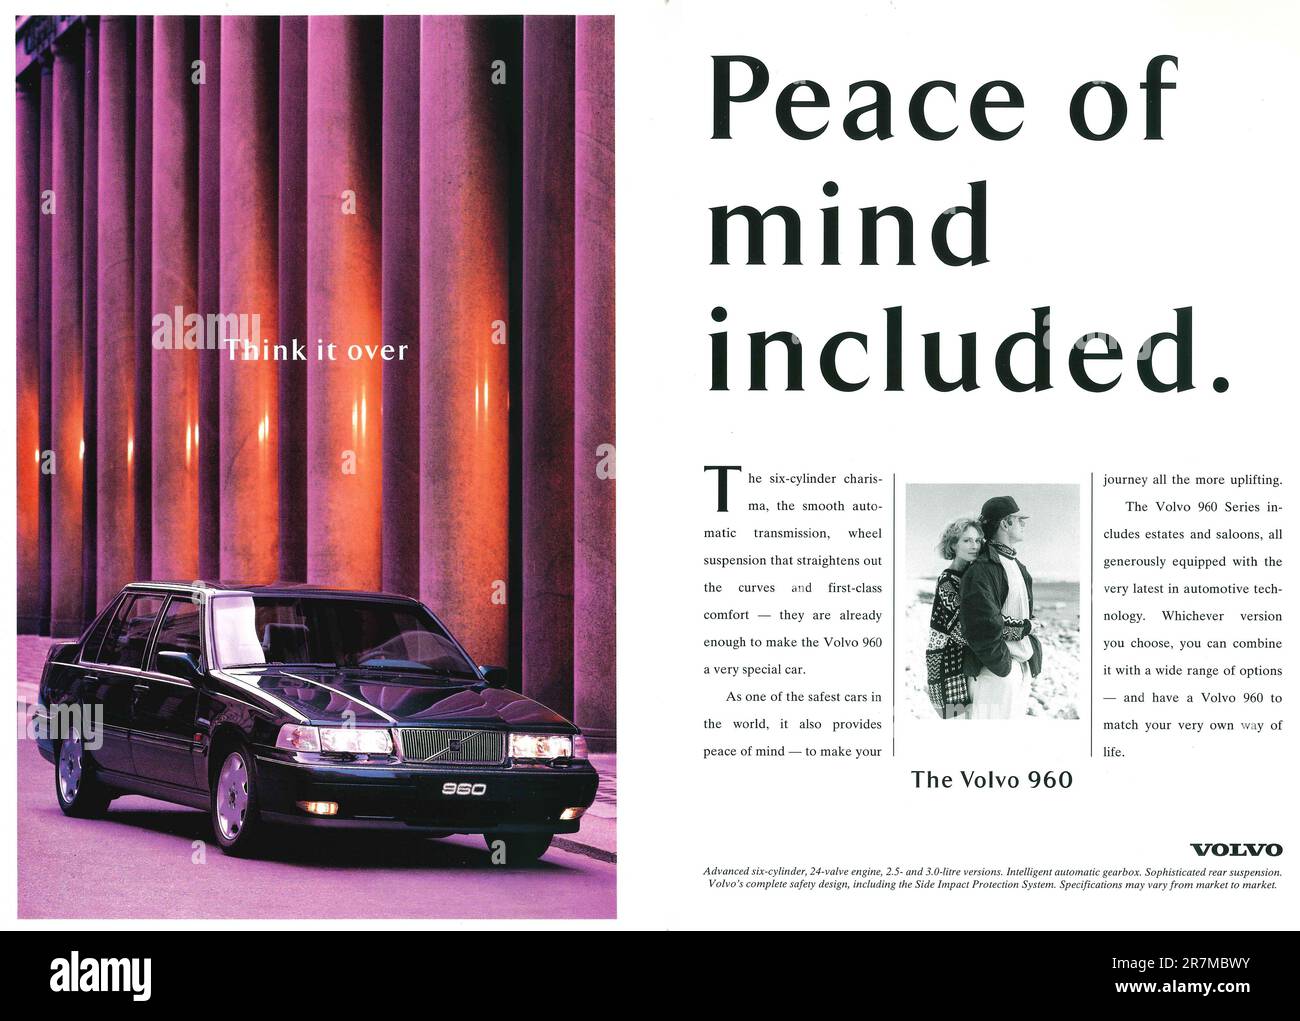 Volvo 960 advertisement placed inside a NatGeo magazine, 1995 Stock Photo